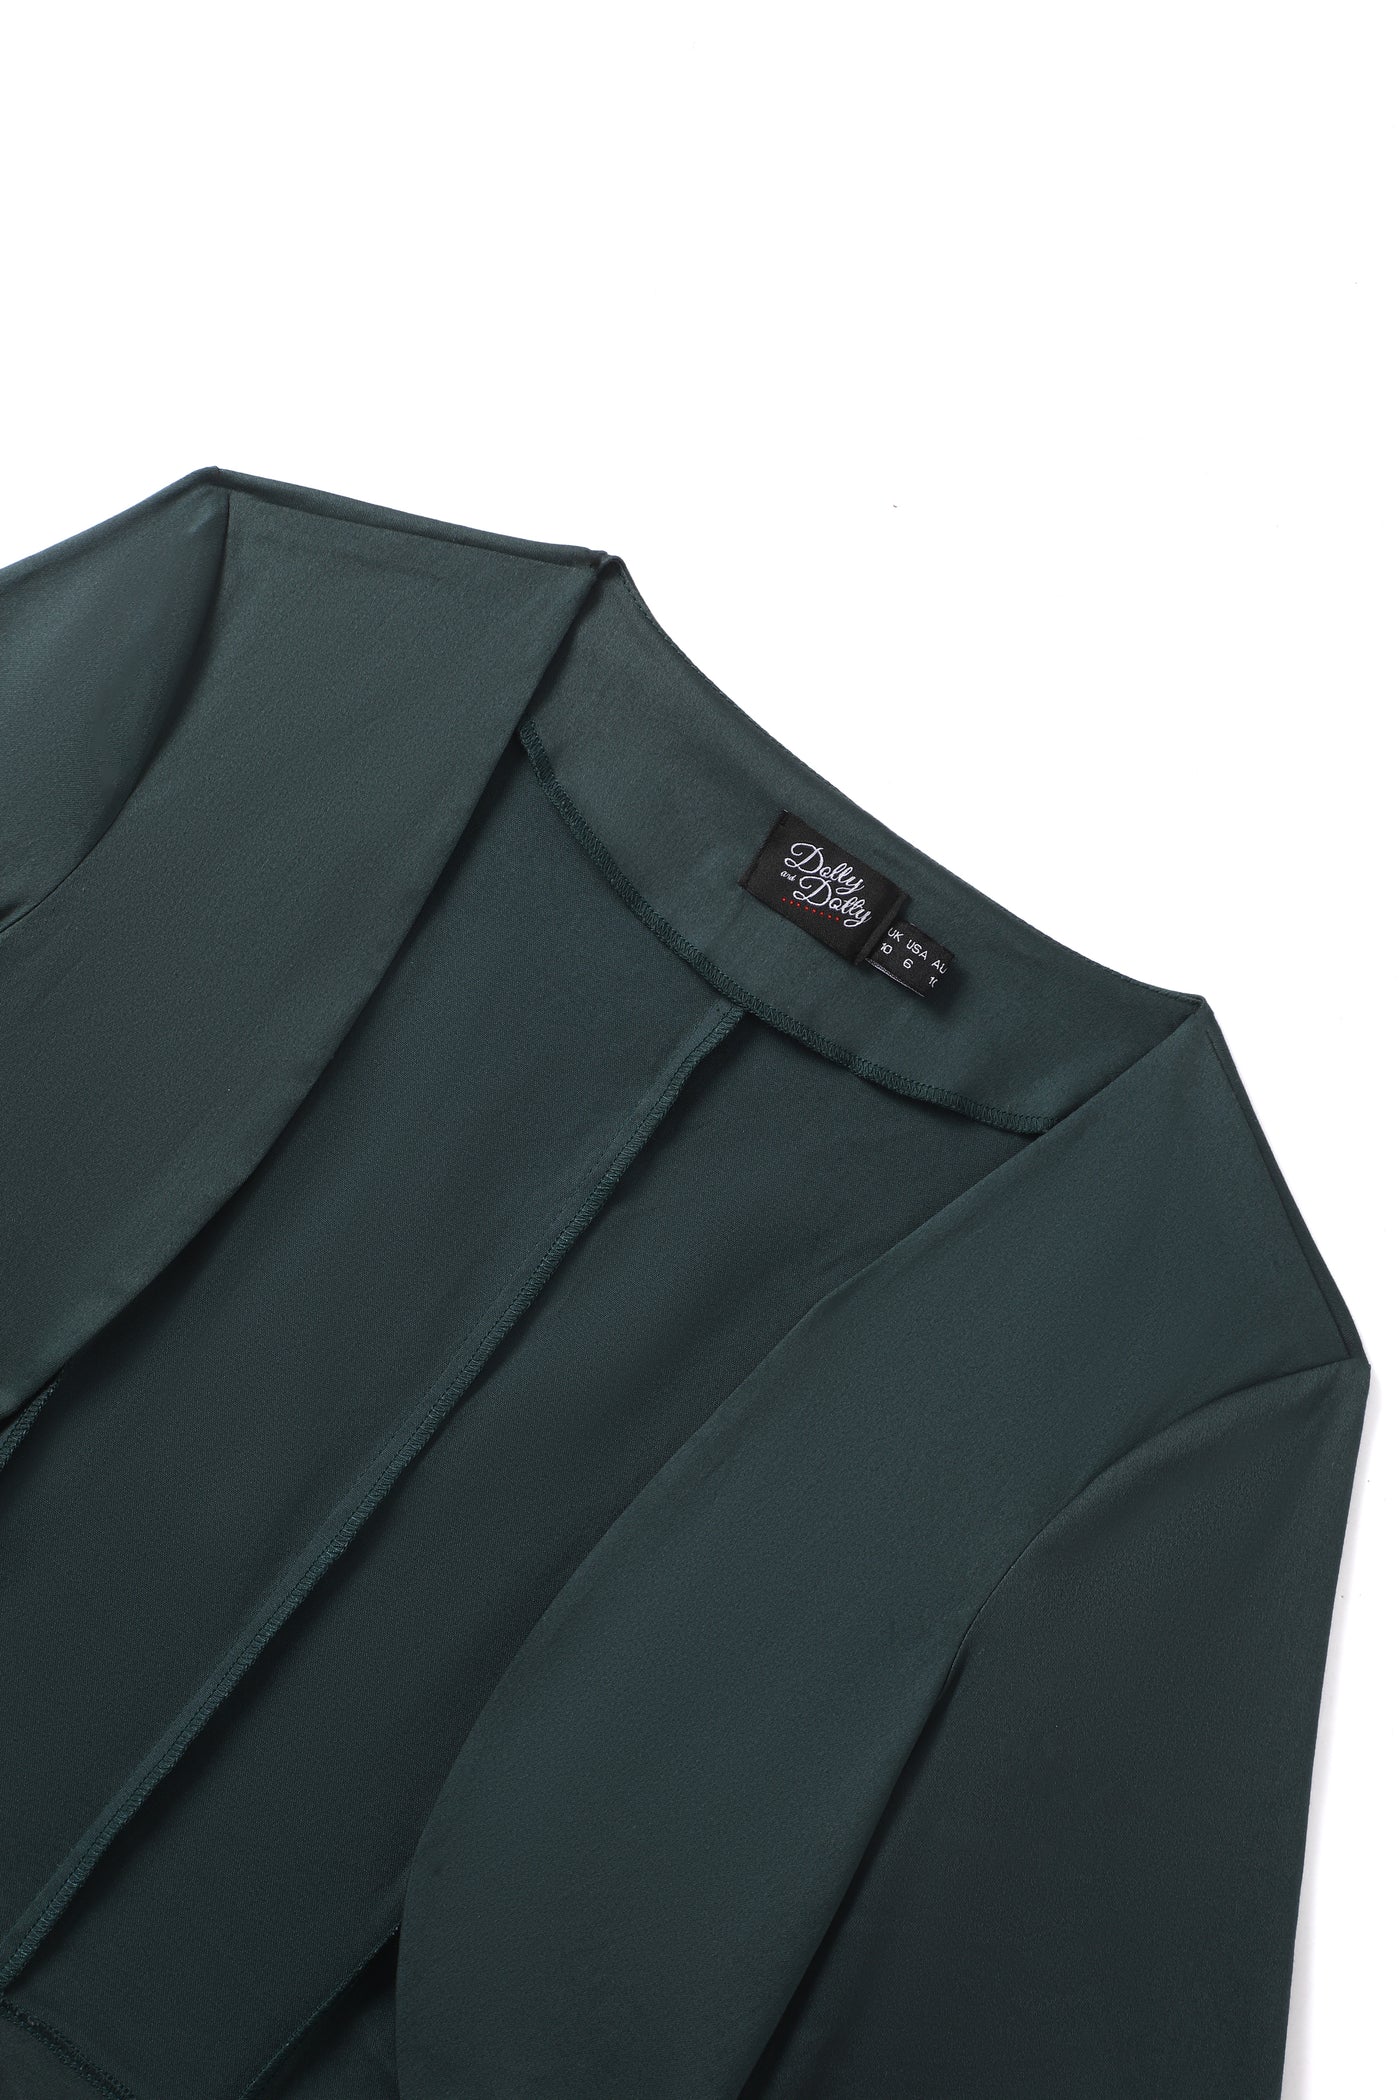 Close up view of Dark Green Bolero Jacket